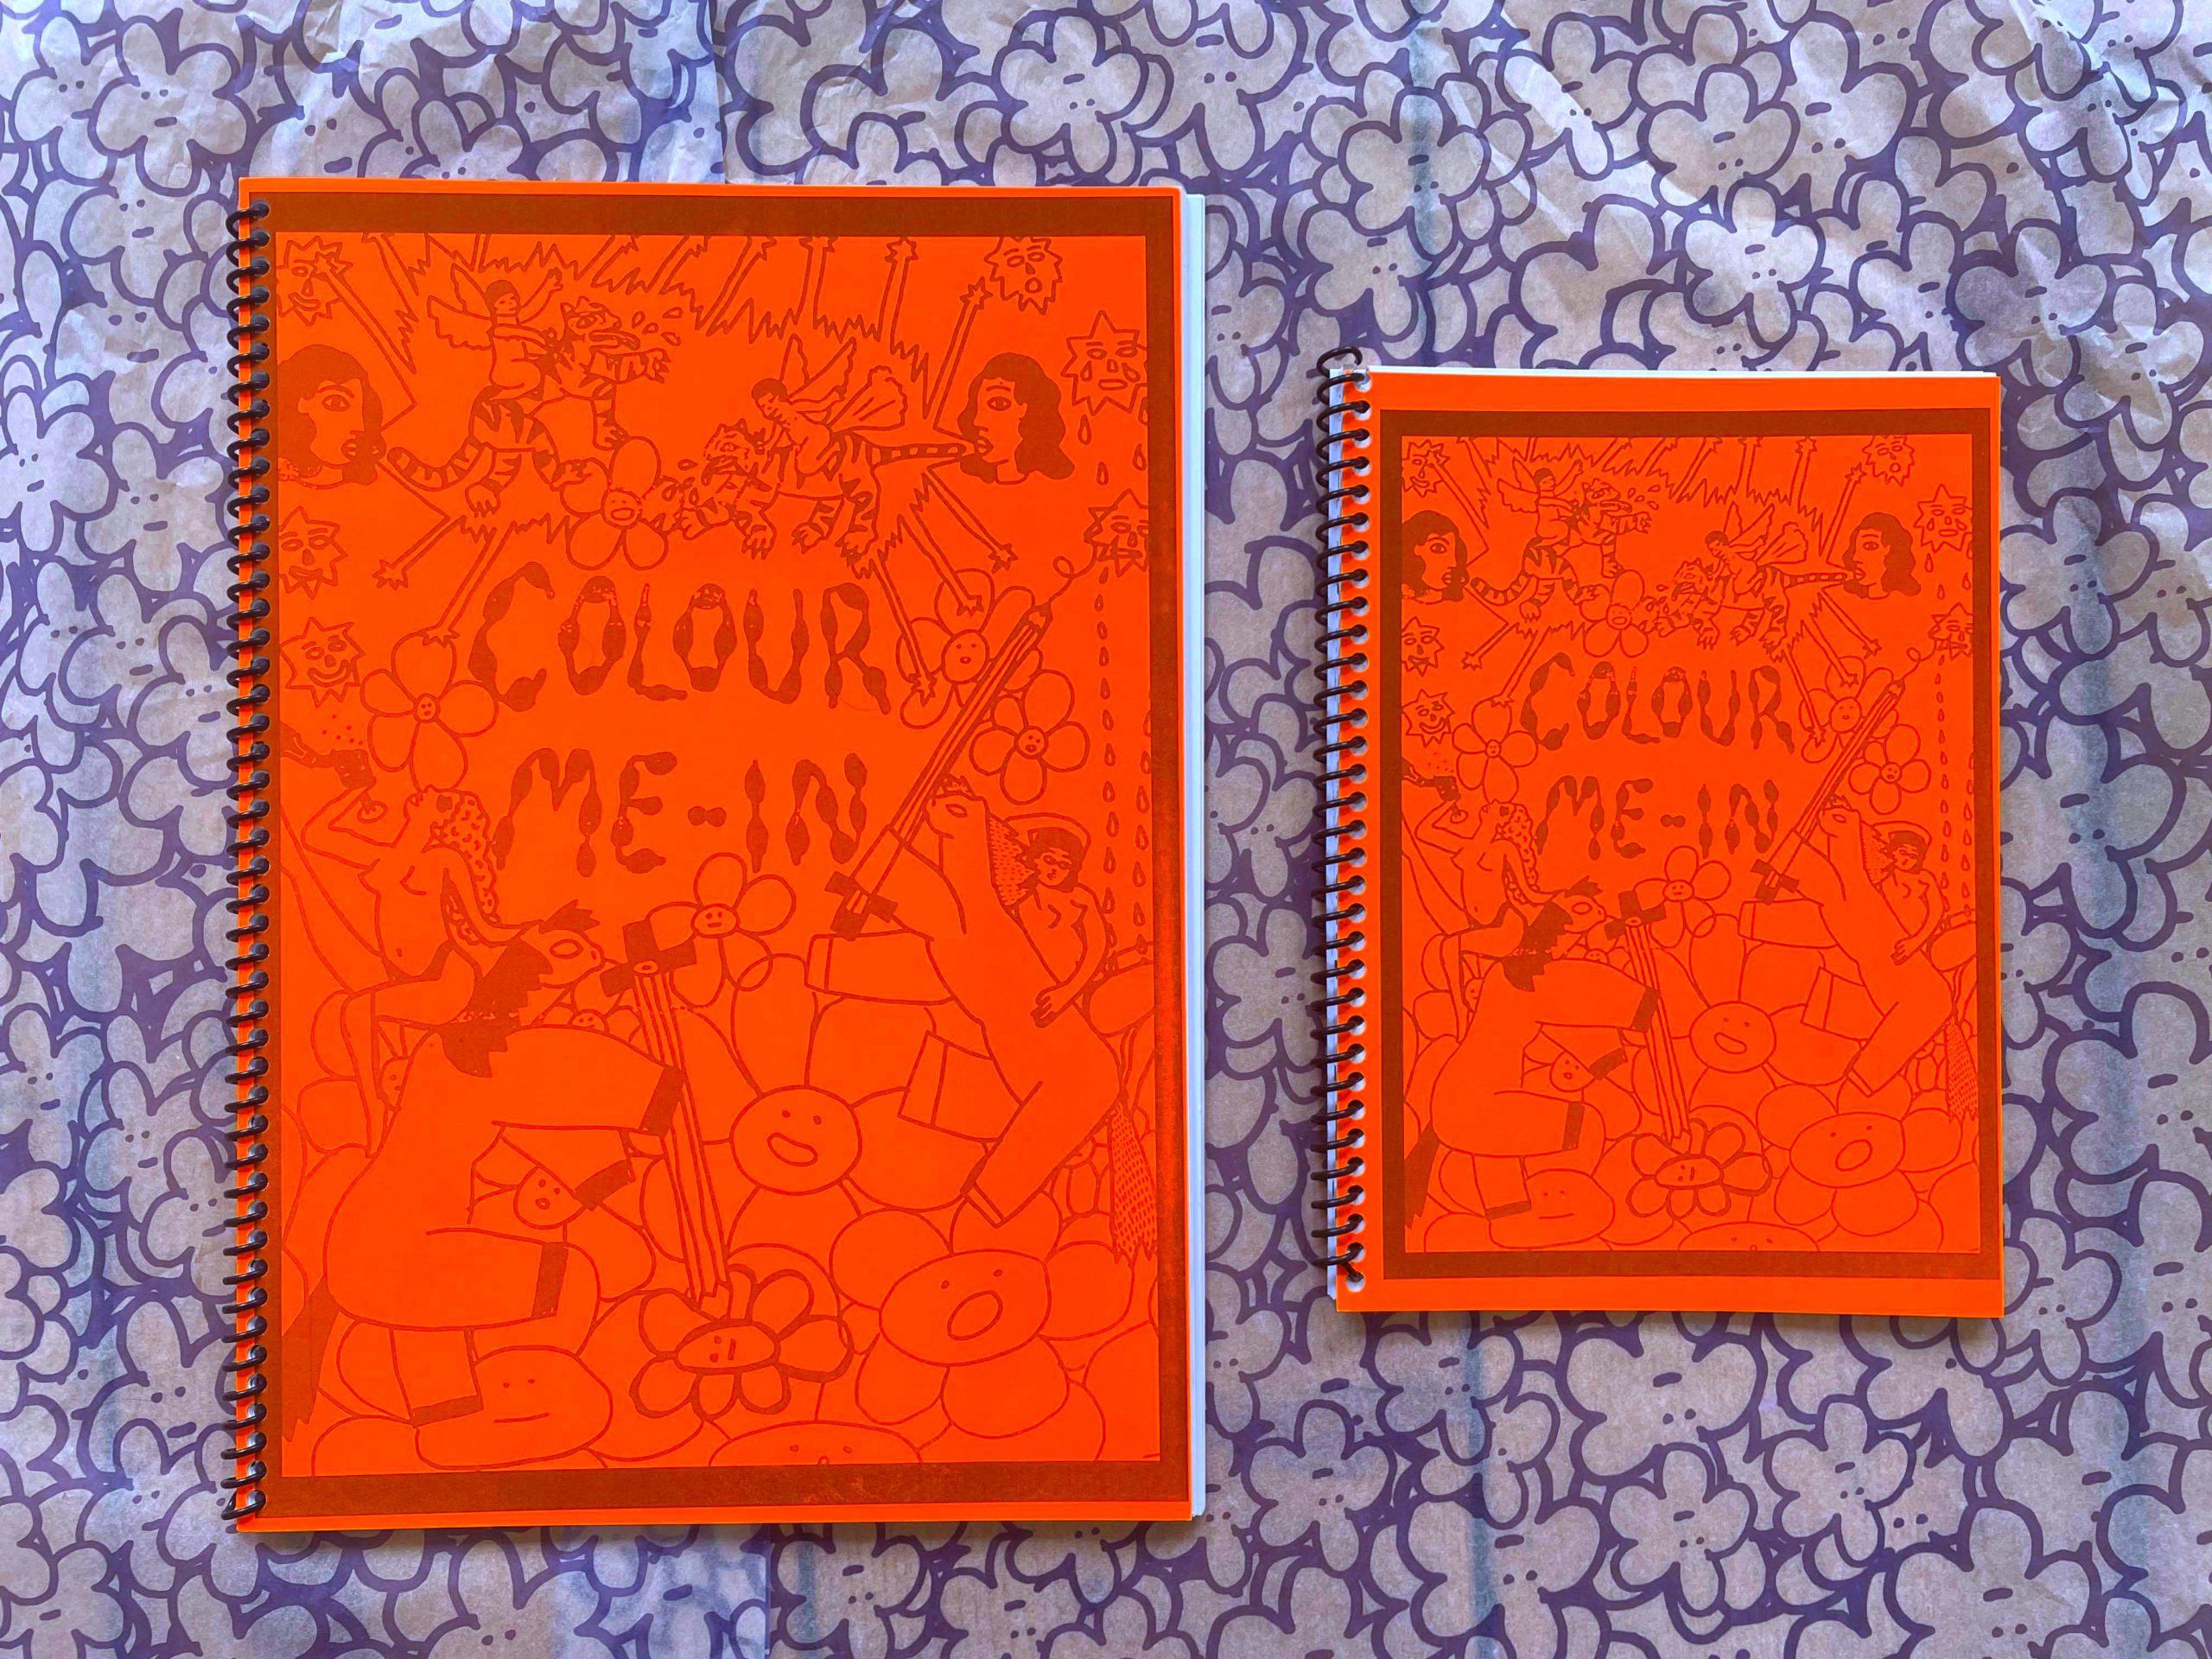 Colour me in book